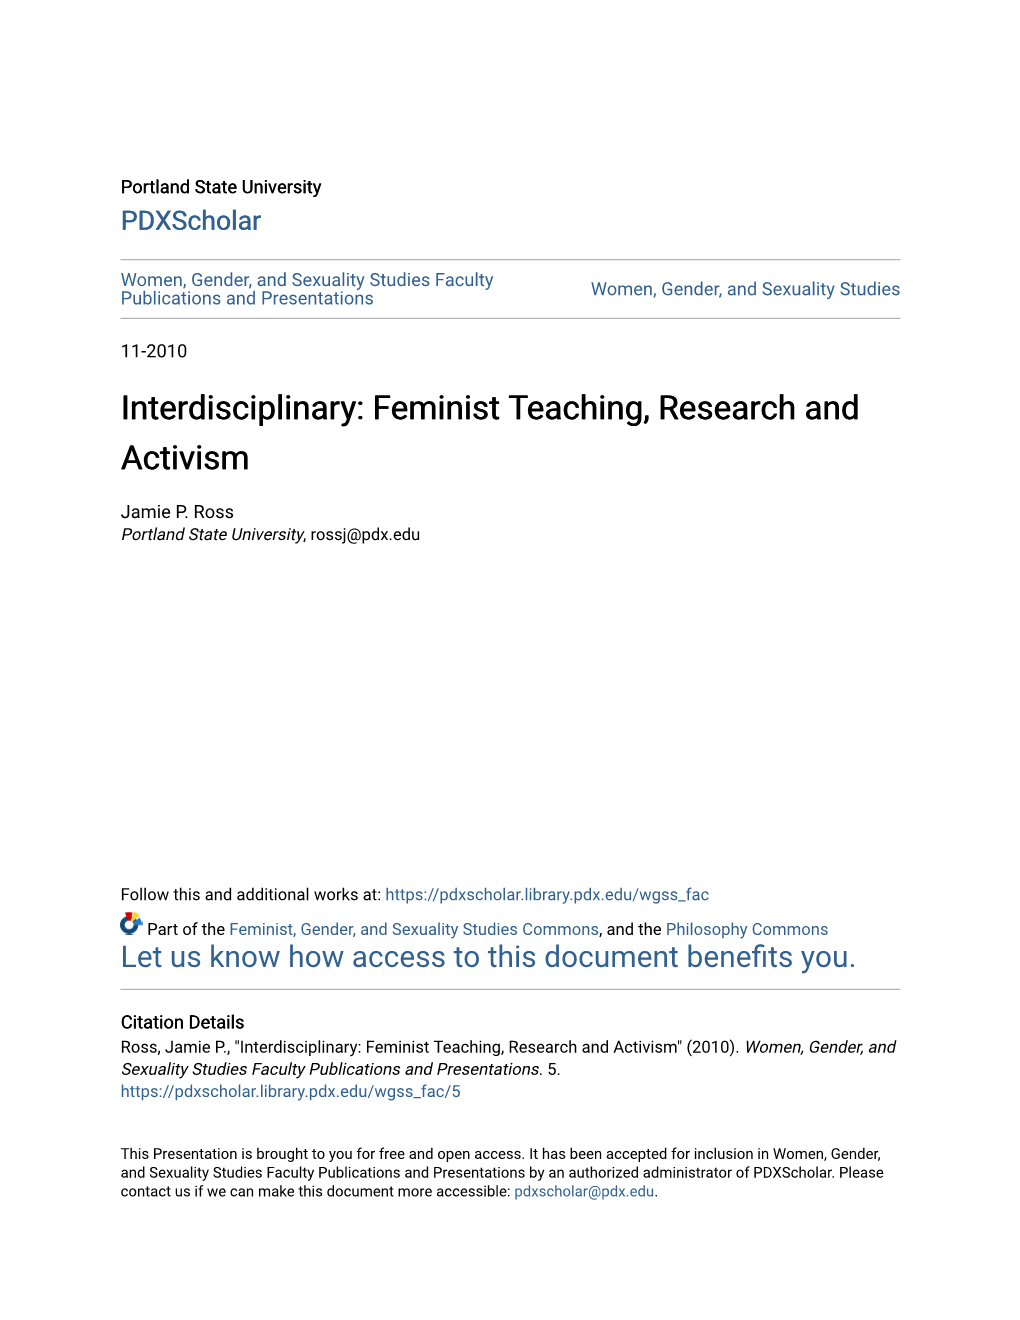 Interdisciplinary: Feminist Teaching, Research and Activism